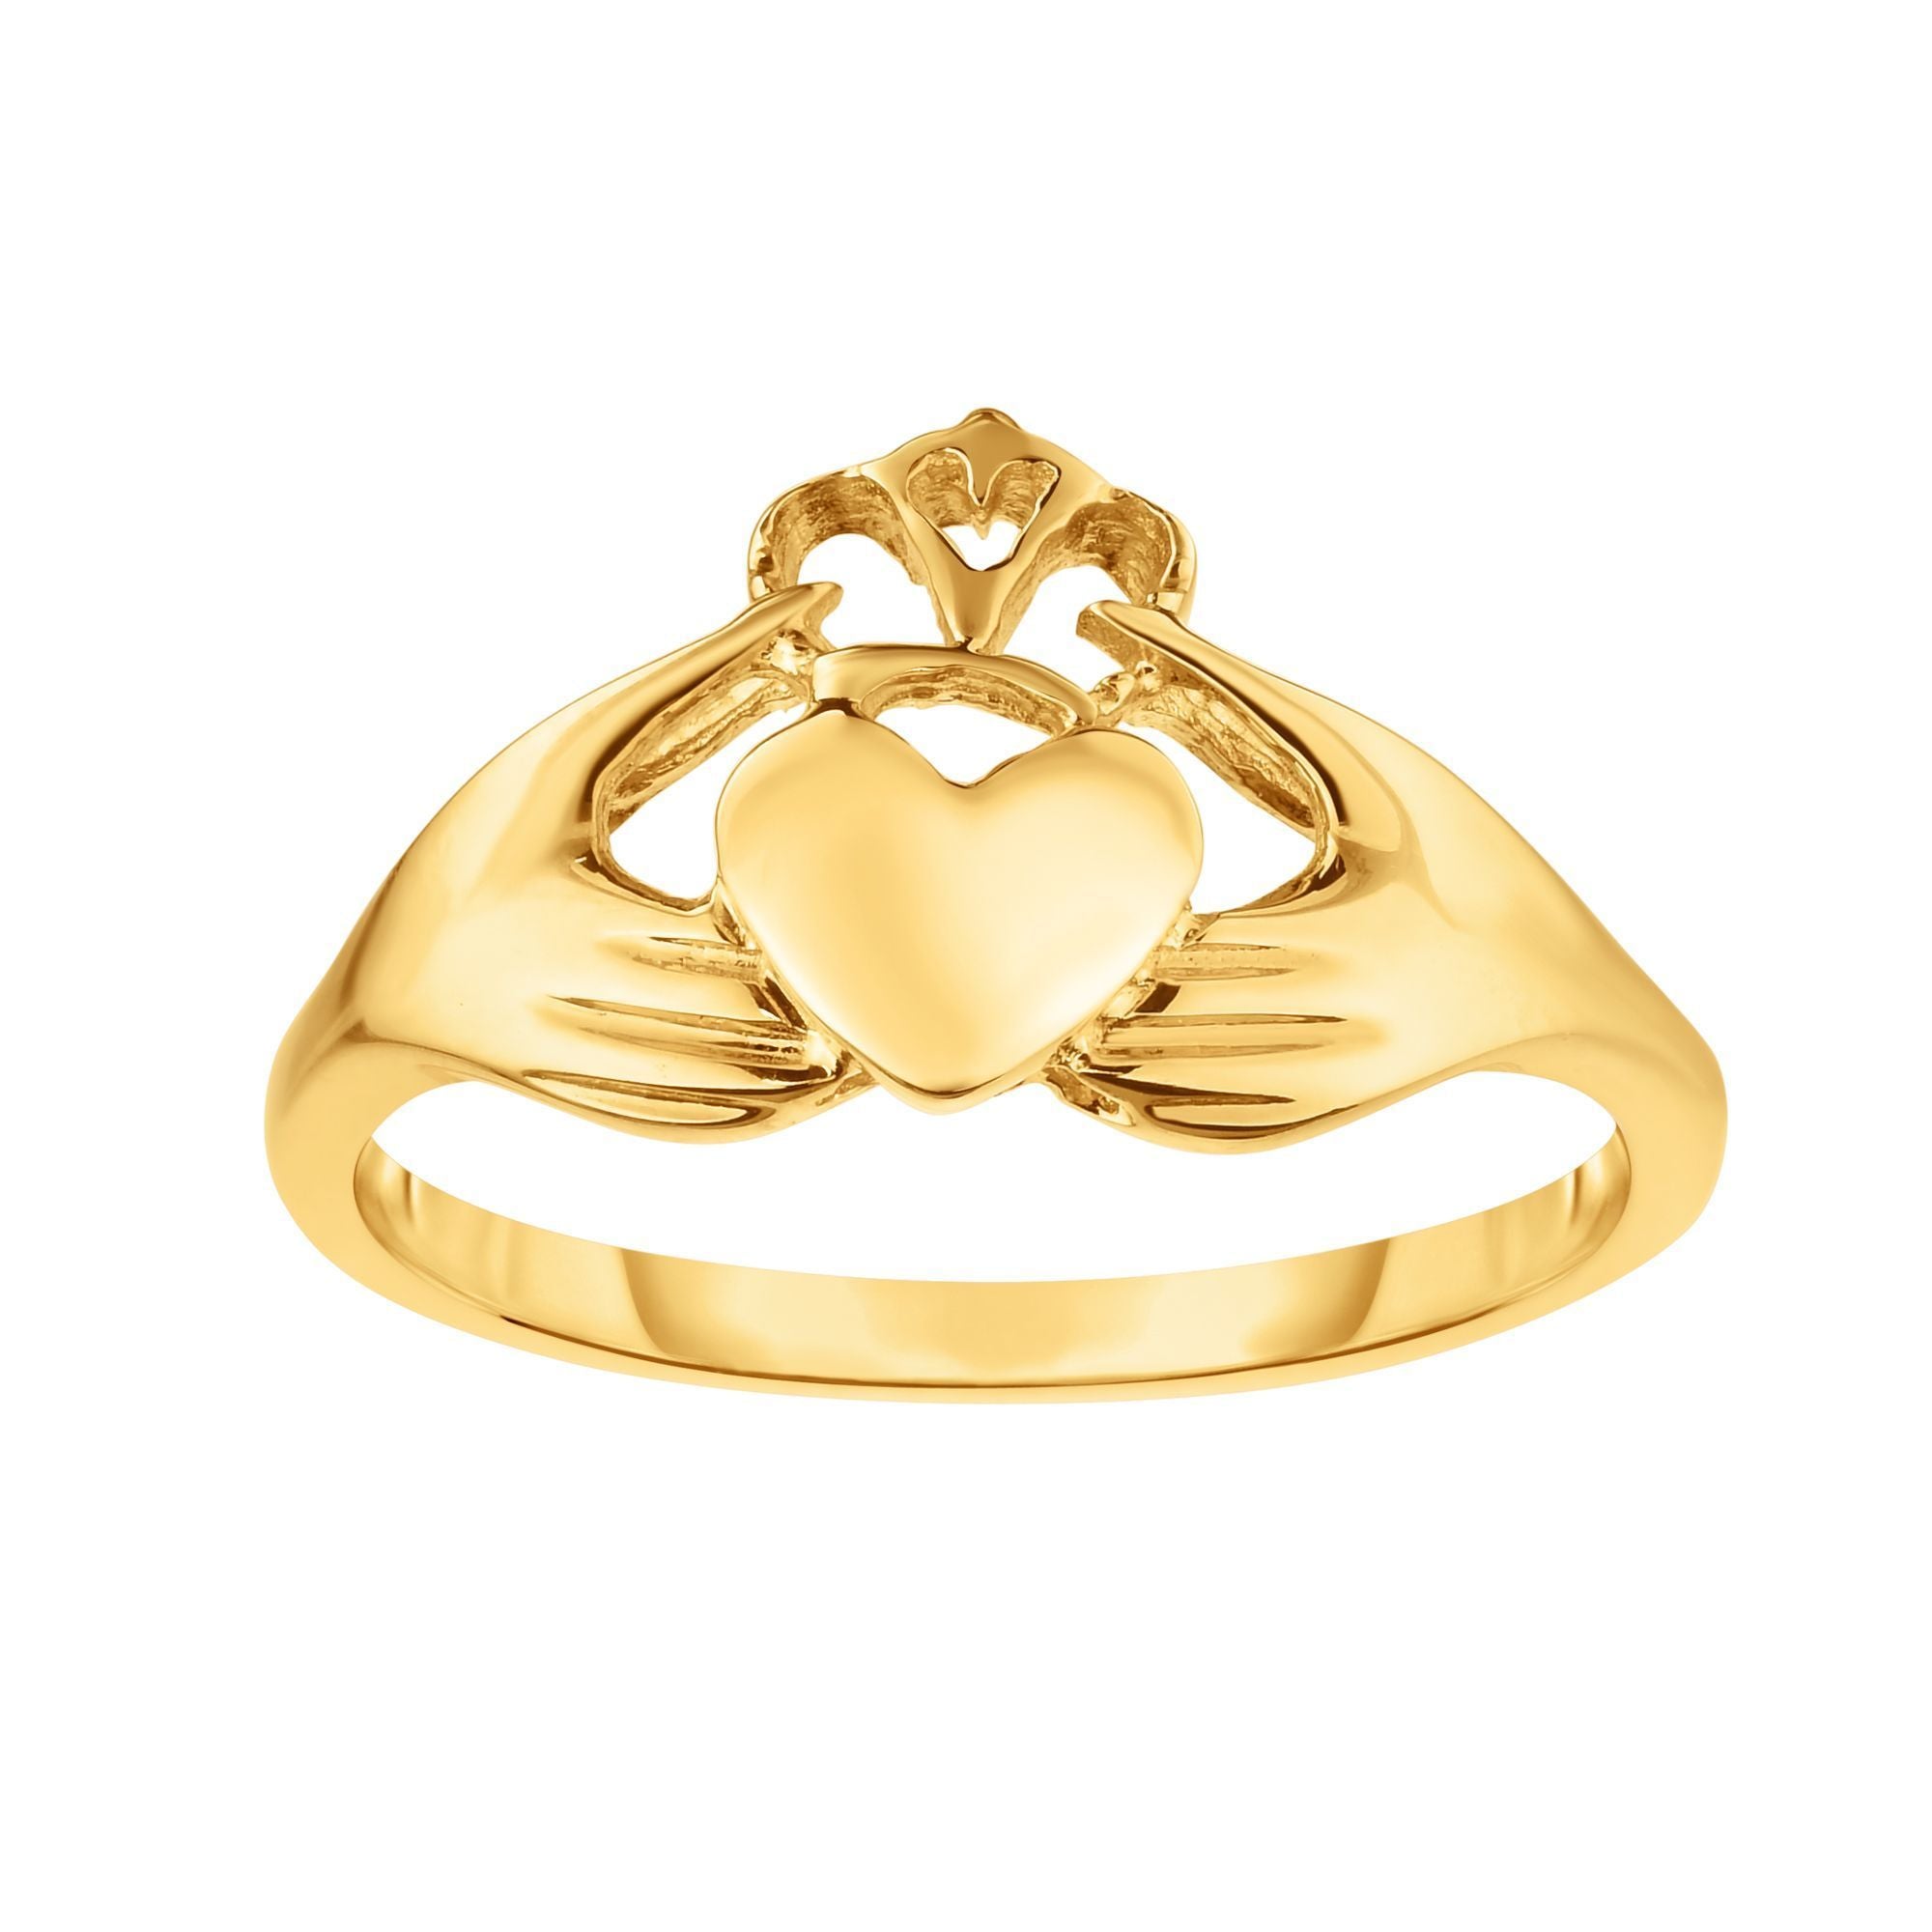 Minimalist Irish Claddagh Loyal Friendship Love Heart Ring - wingroupjewelry